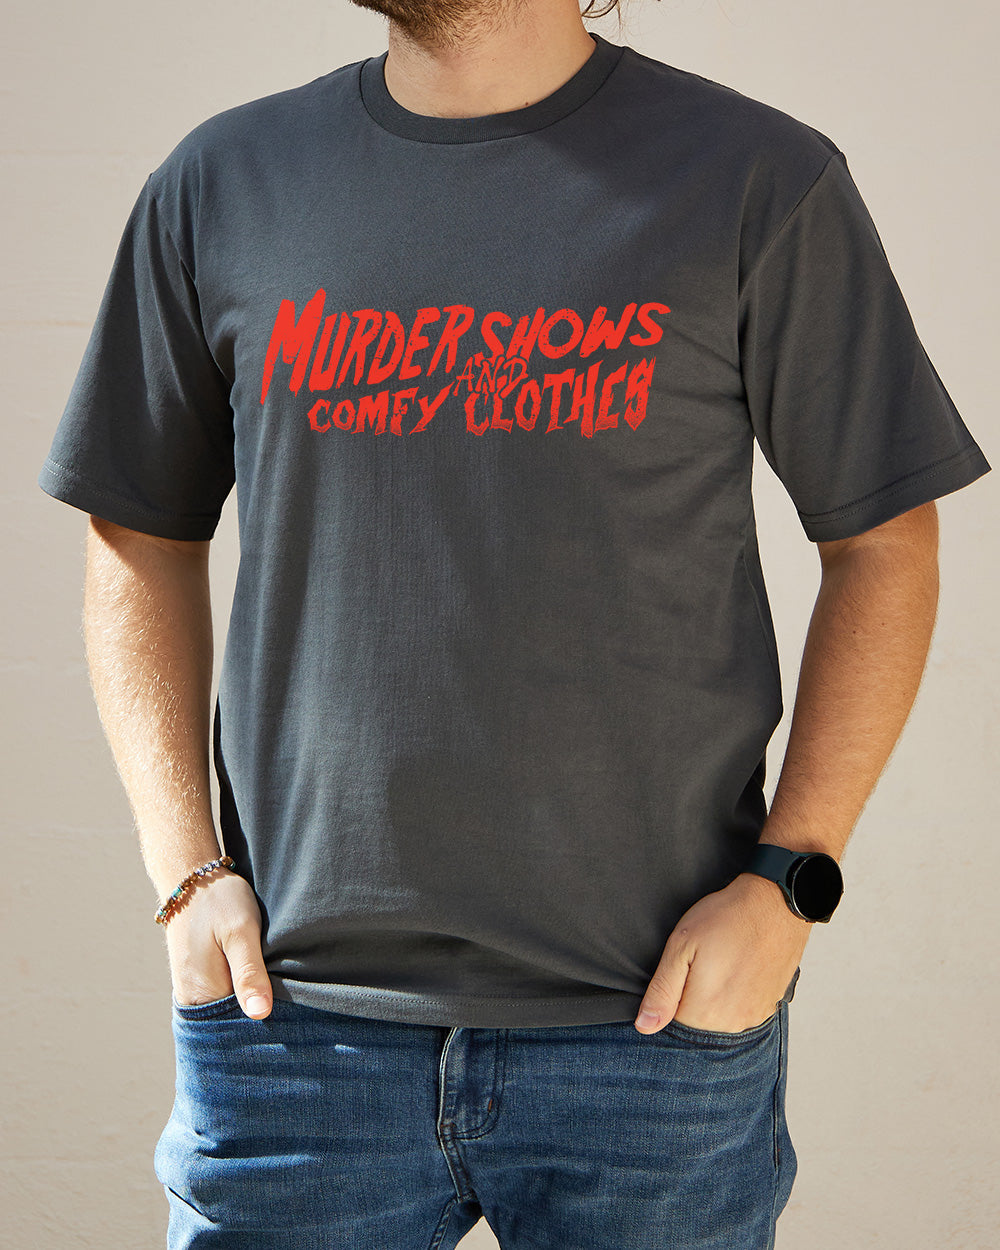 Murder Shows & Comfy Clothes Shirt